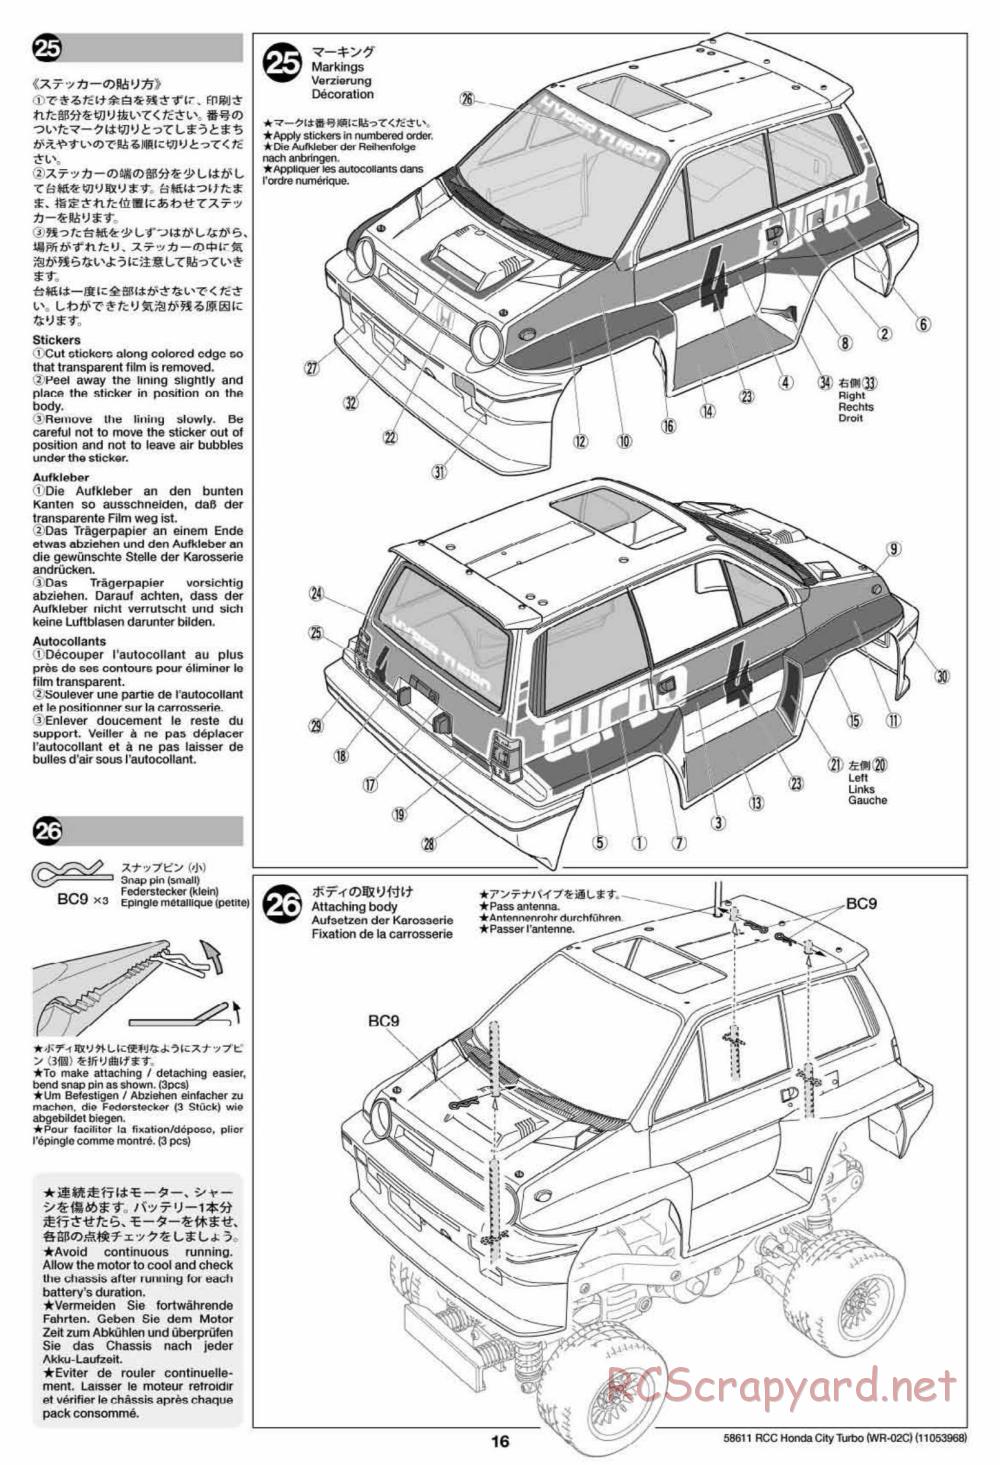 Tamiya - WR-02C Chassis - Manual - Page 16